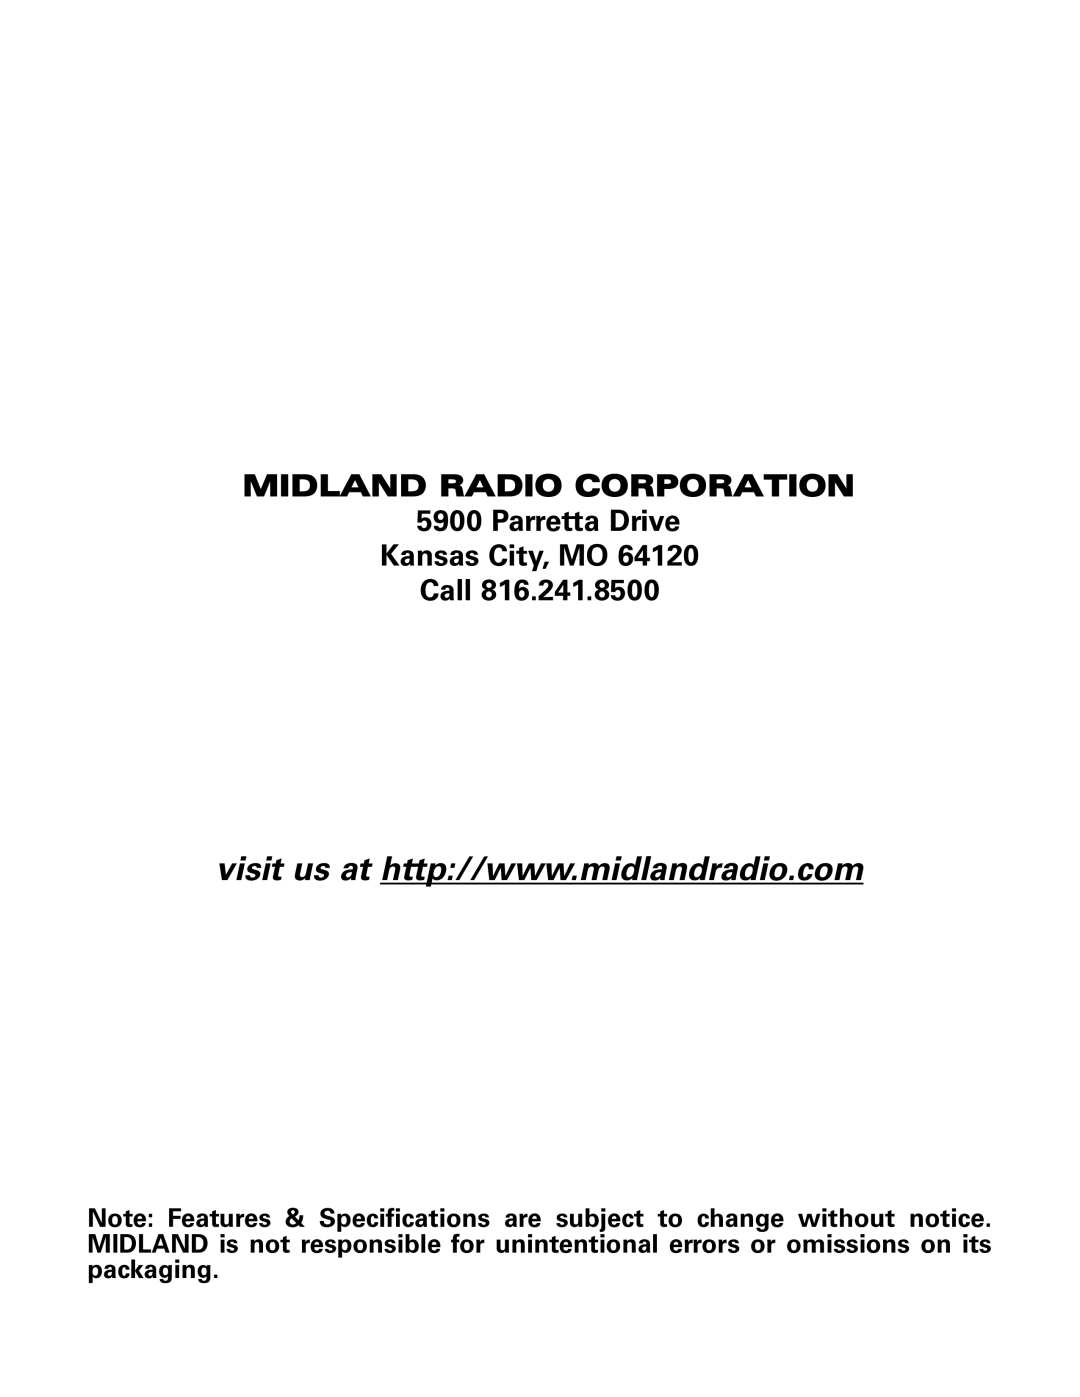 Midland Radio NAUTICO 3 owner manual Midland Radio Corporation, Parretta Drive Kansas City, MO Call 